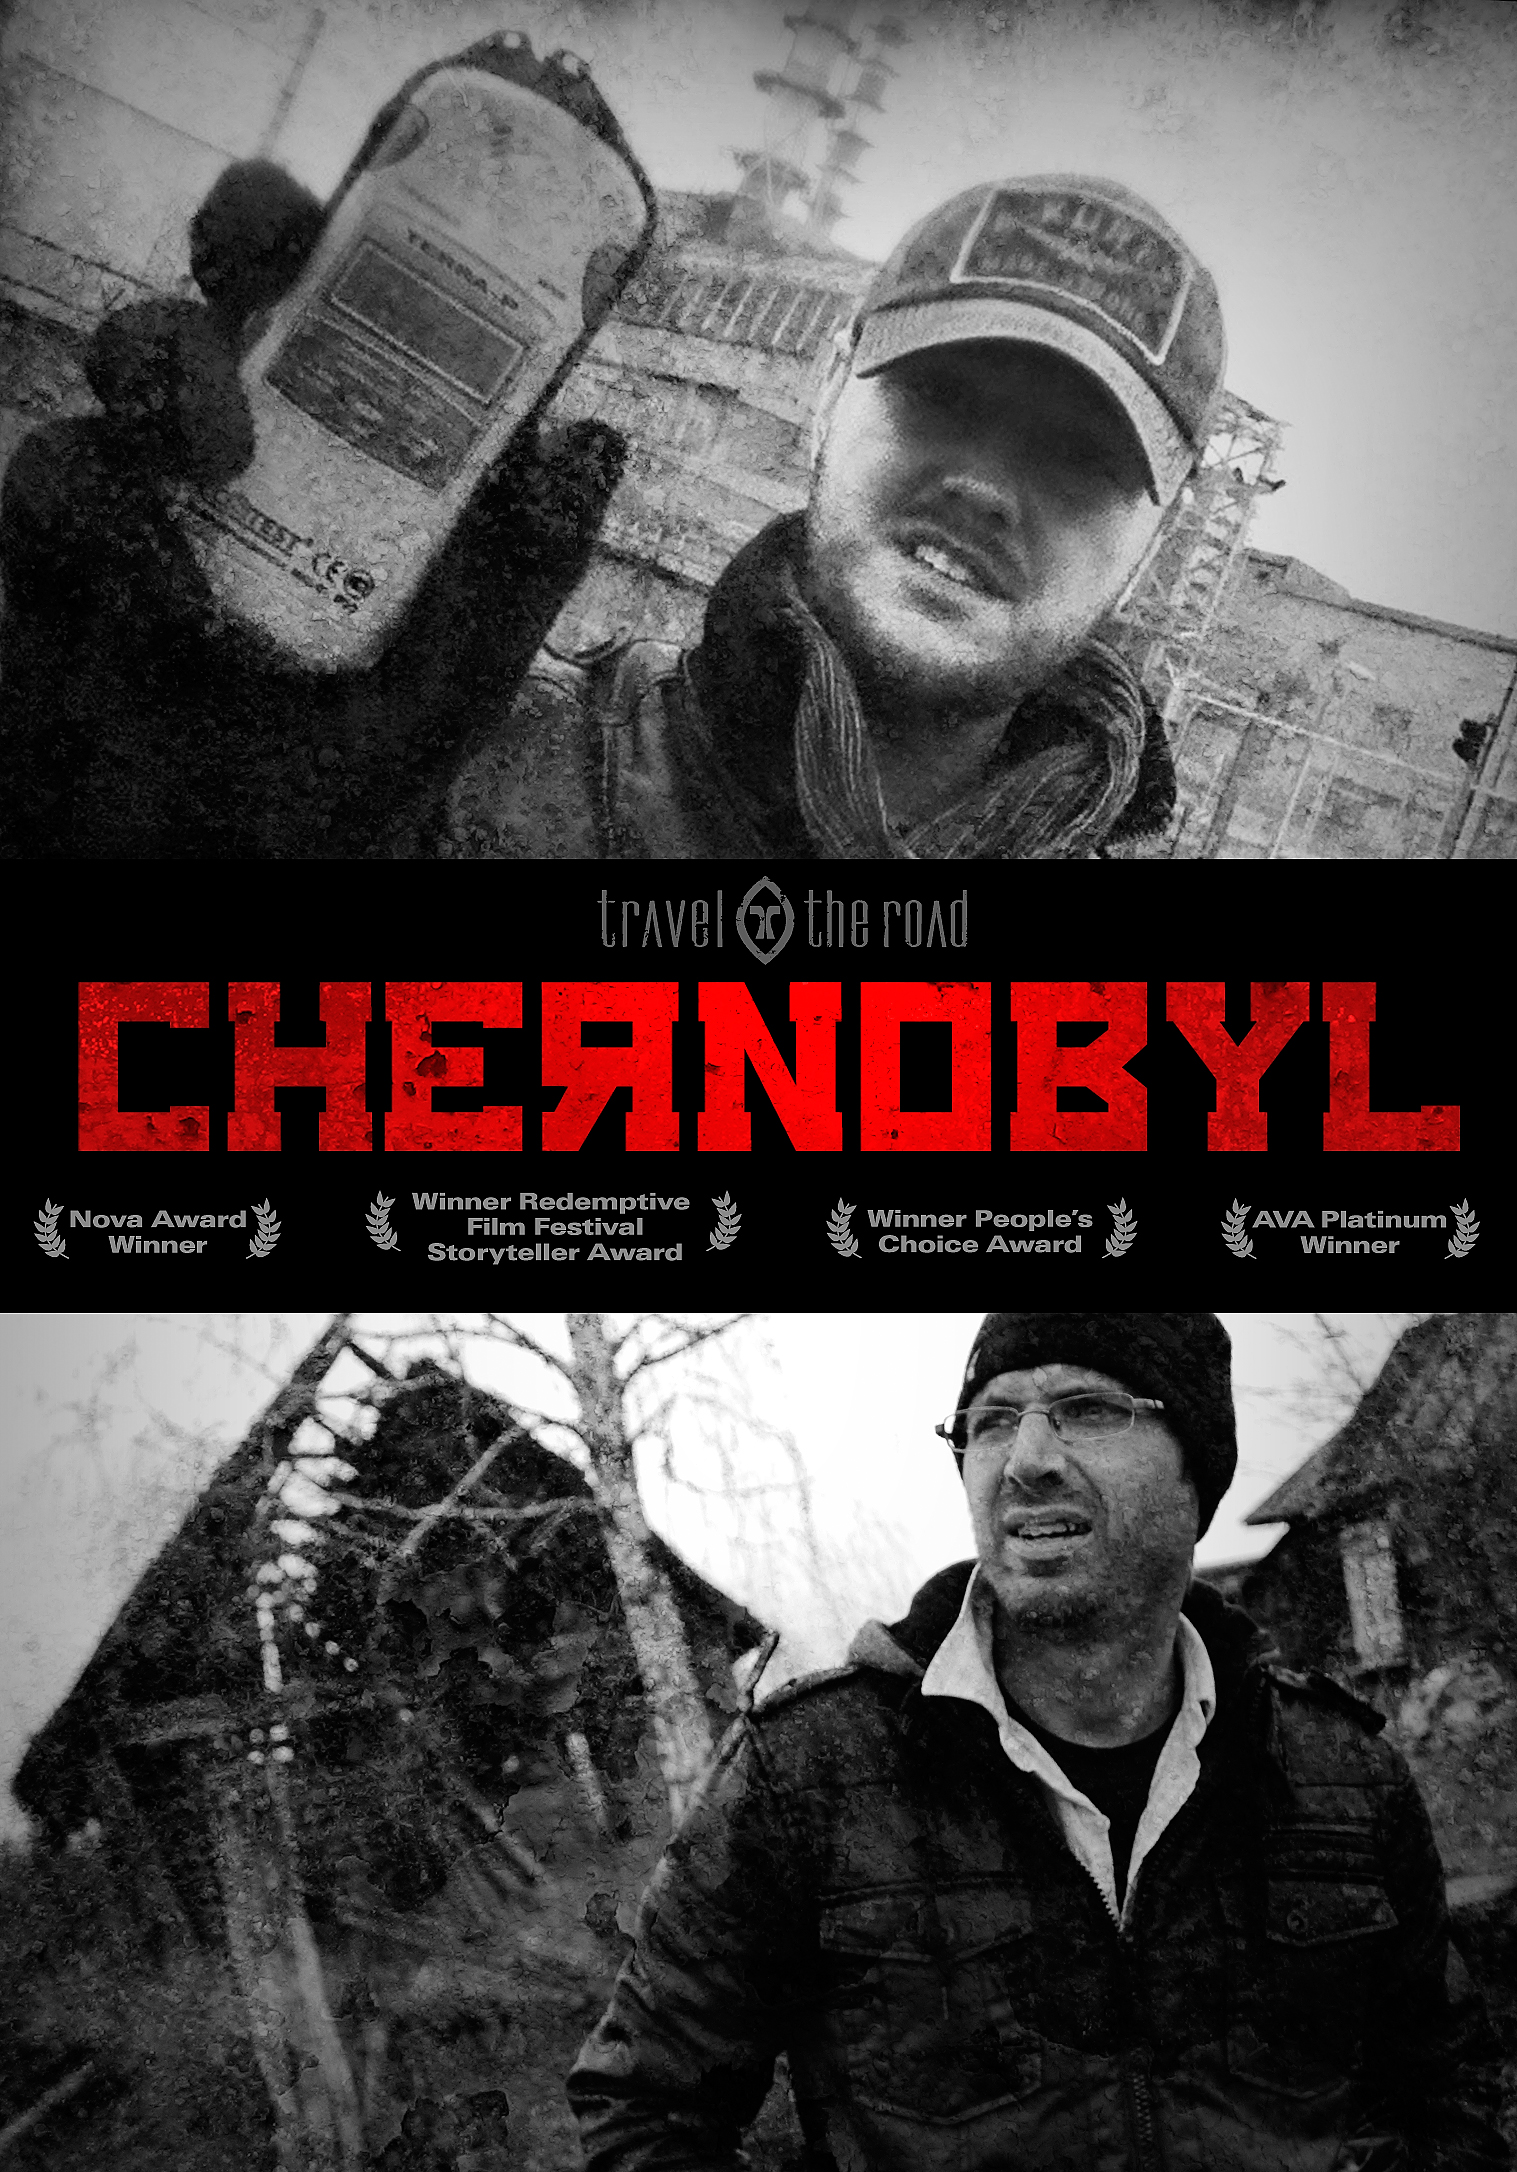 ttr chernobyl image v2 hi res  (1).jpg